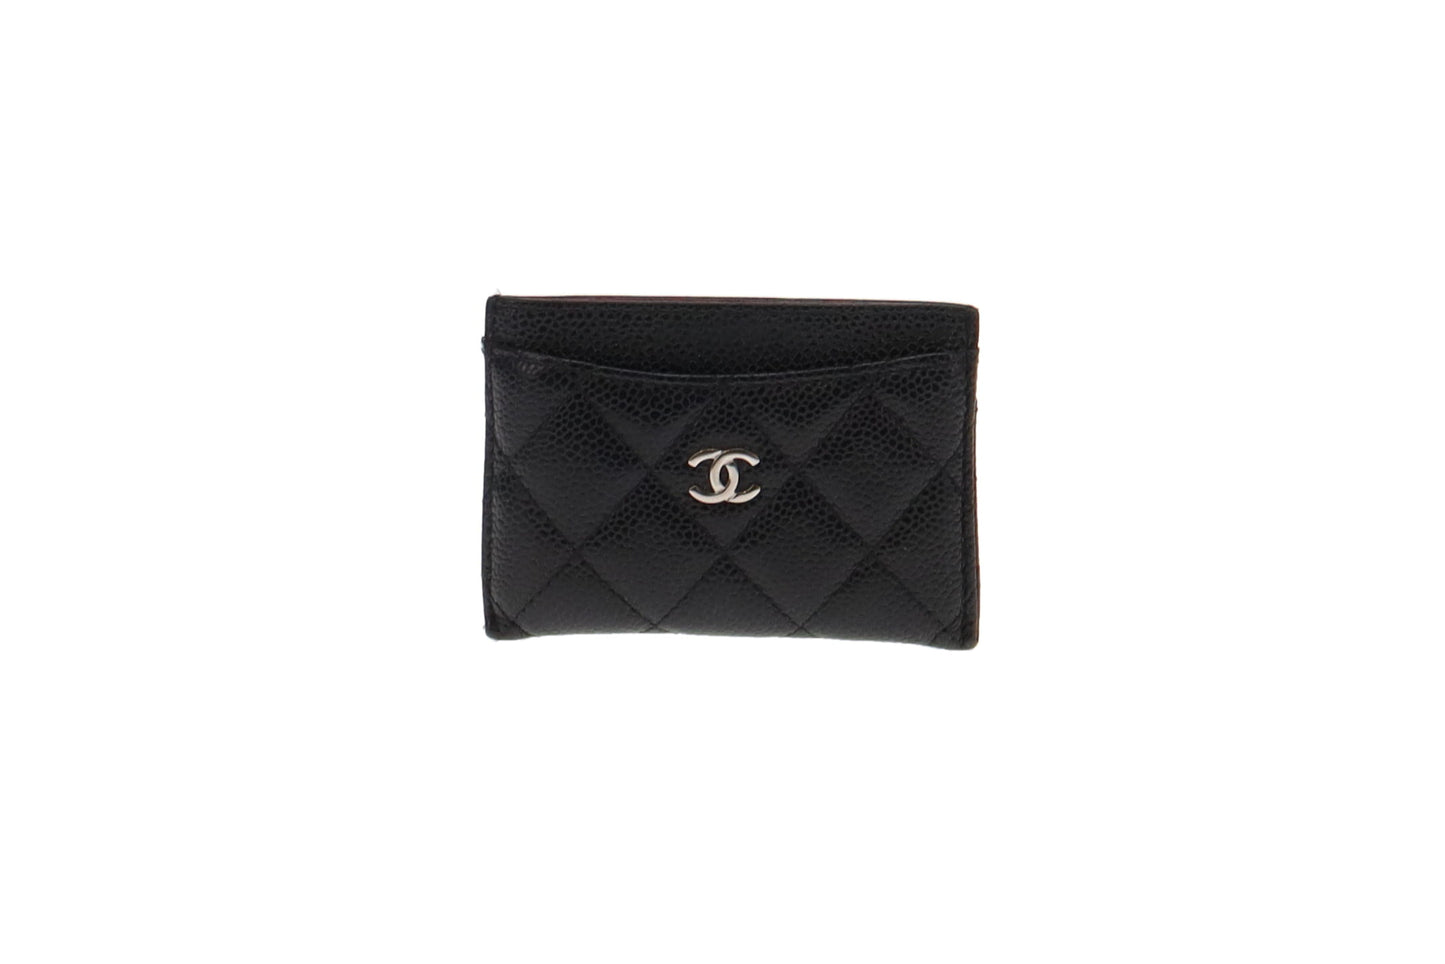 Chanel Black Caviar Leather Classic Card Holder 2016